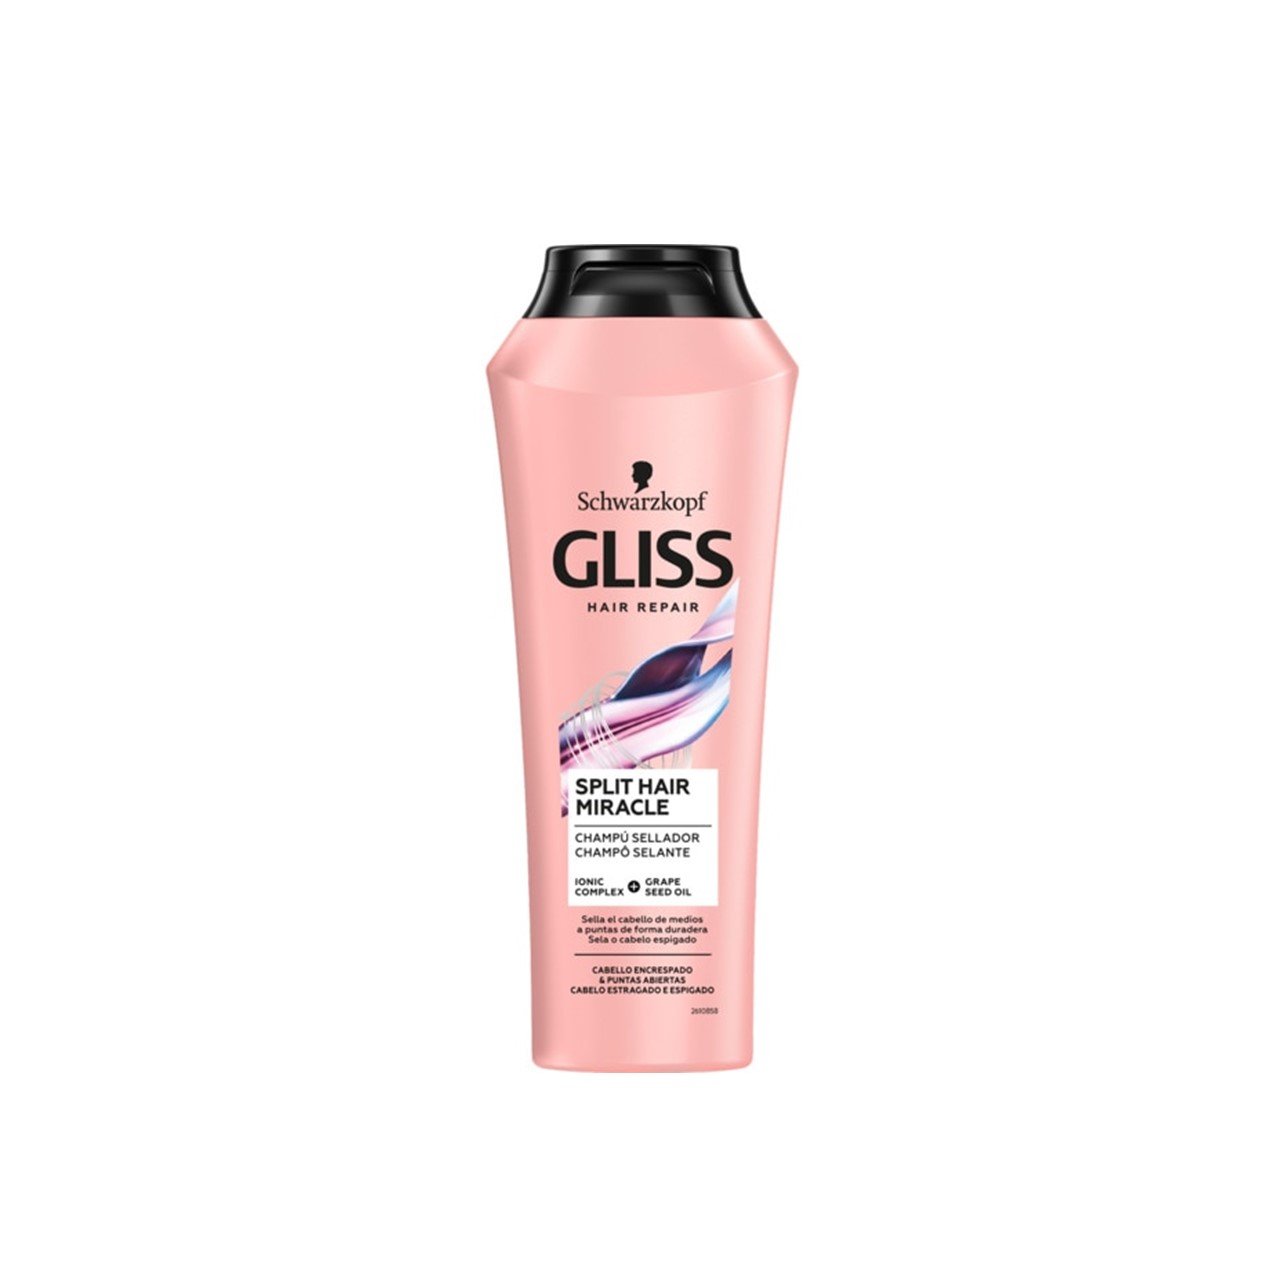 Schwarzkopf Gliss Split Ends Hair Miracle Shampoo 250ml (8.45fl oz)